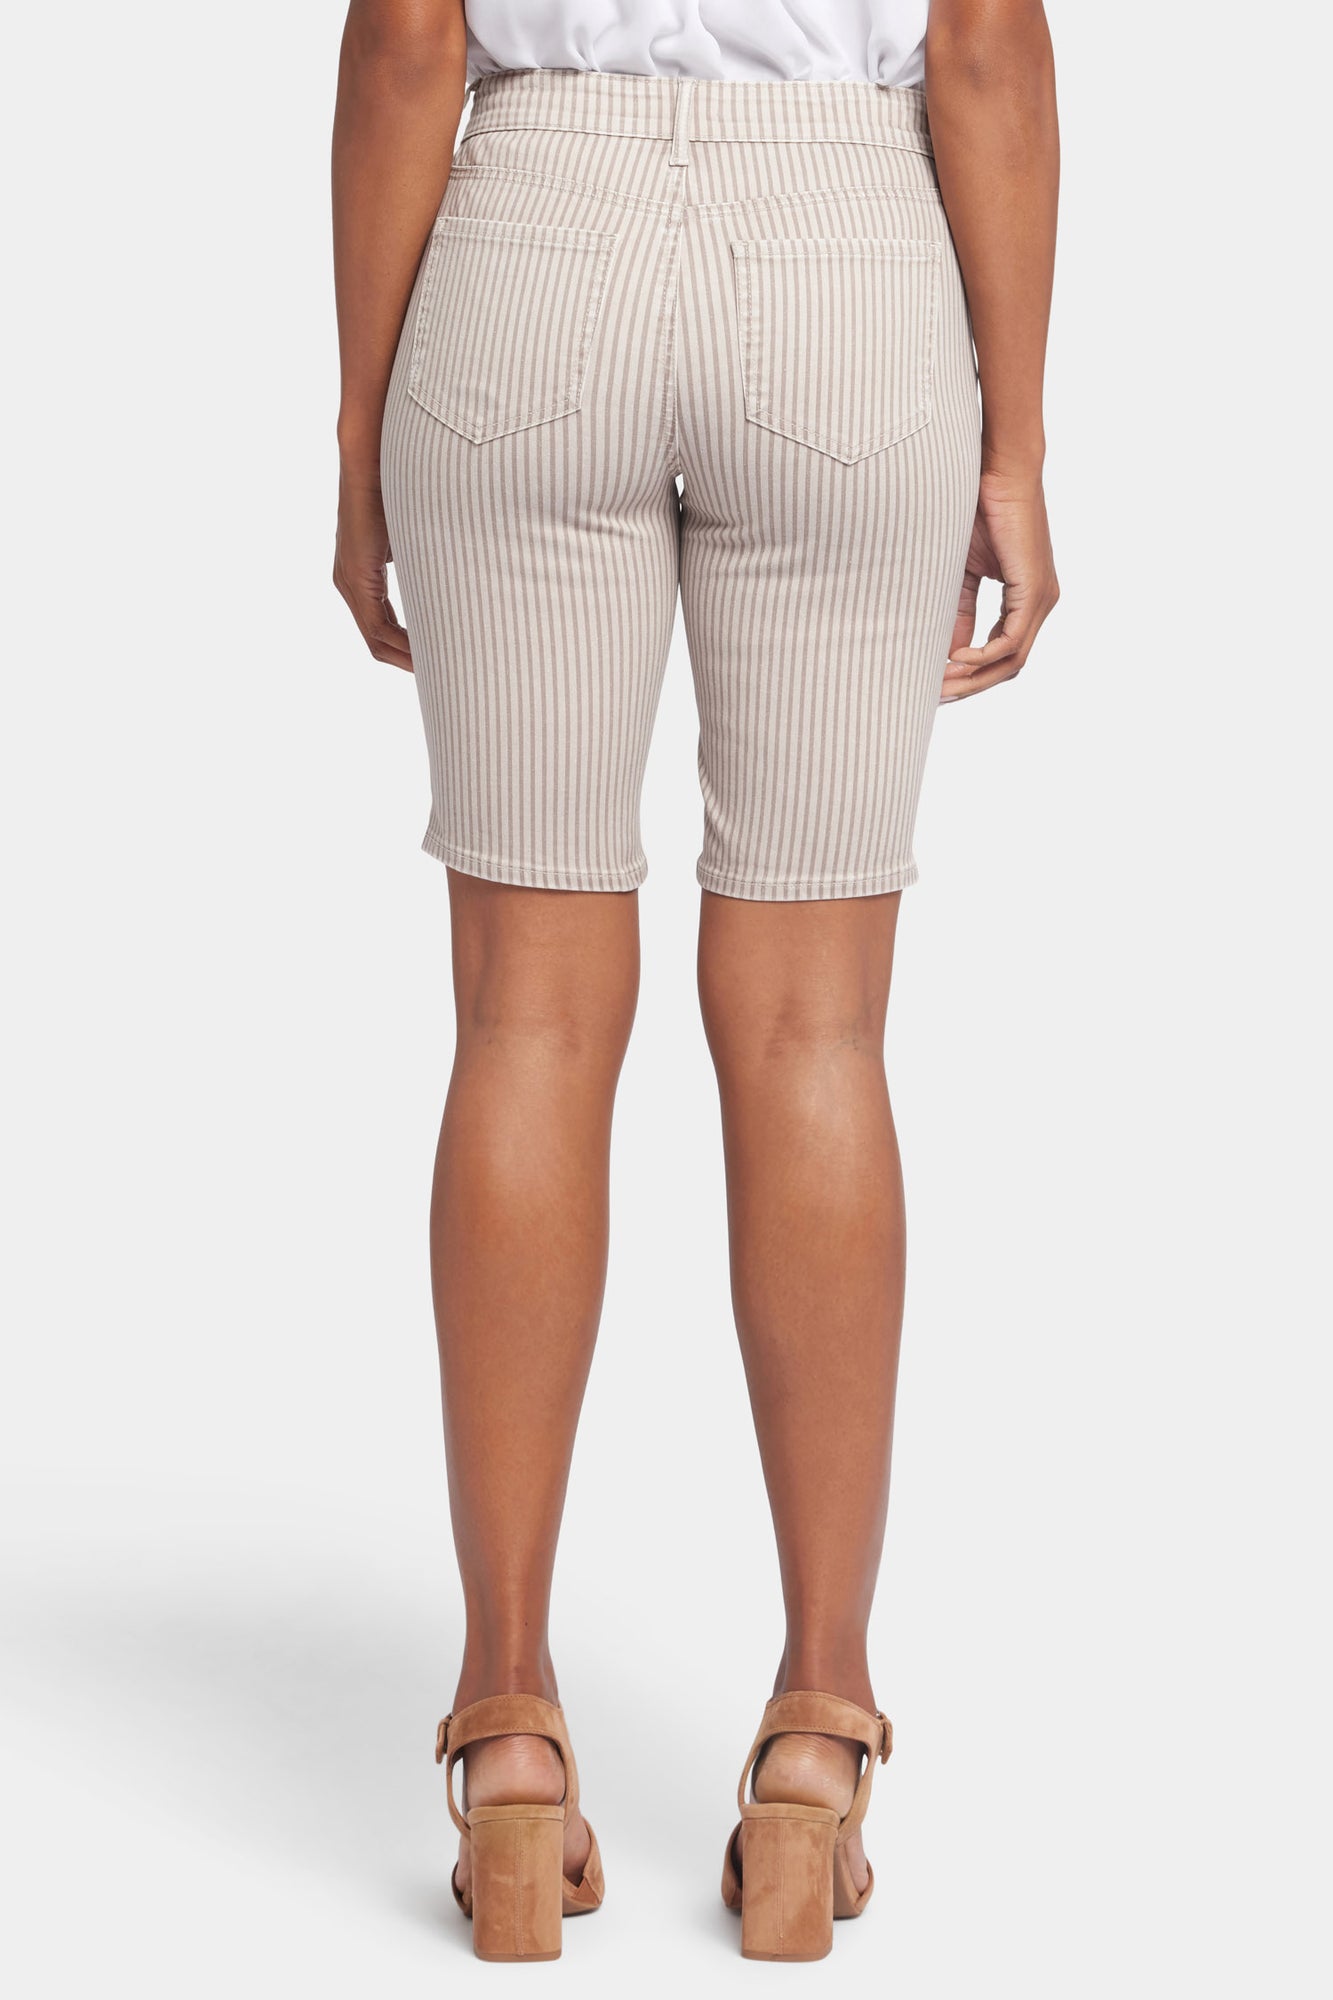 NYDJ Briella 10 Inch Denim Shorts In Petite  - Sandbar Stripe